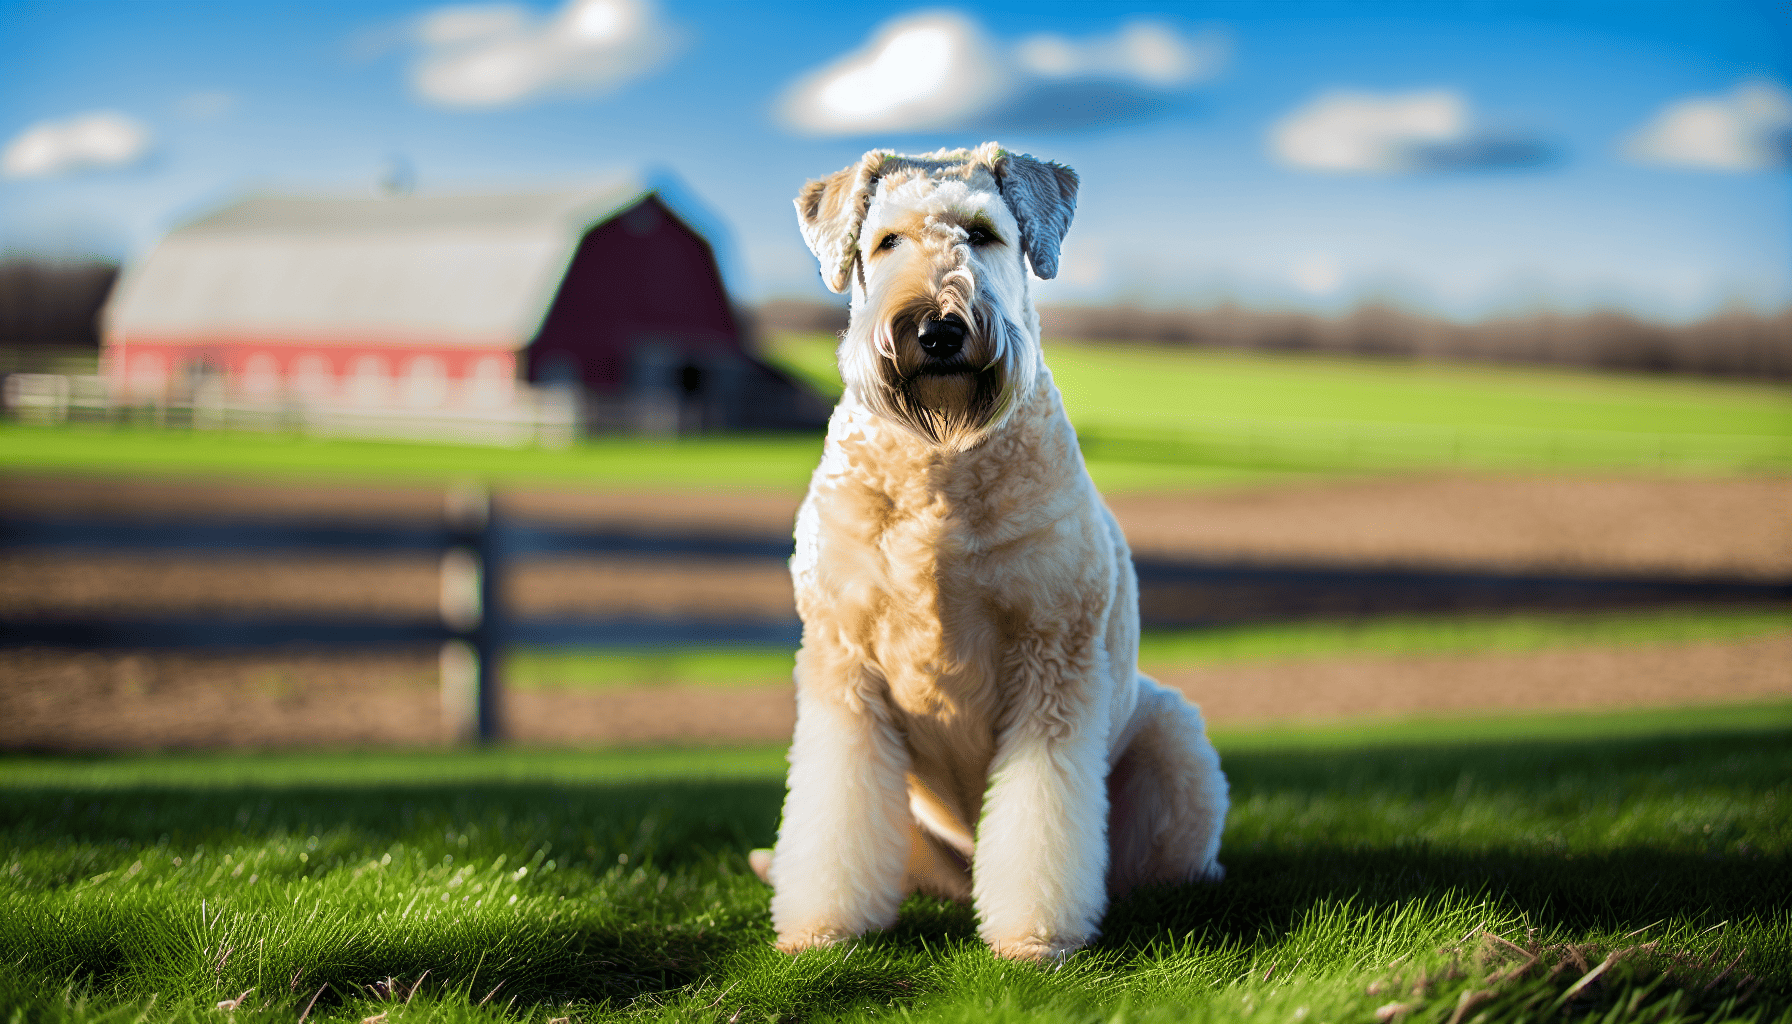 Soft Coated Wheaten Terrier sitting in a farm setting